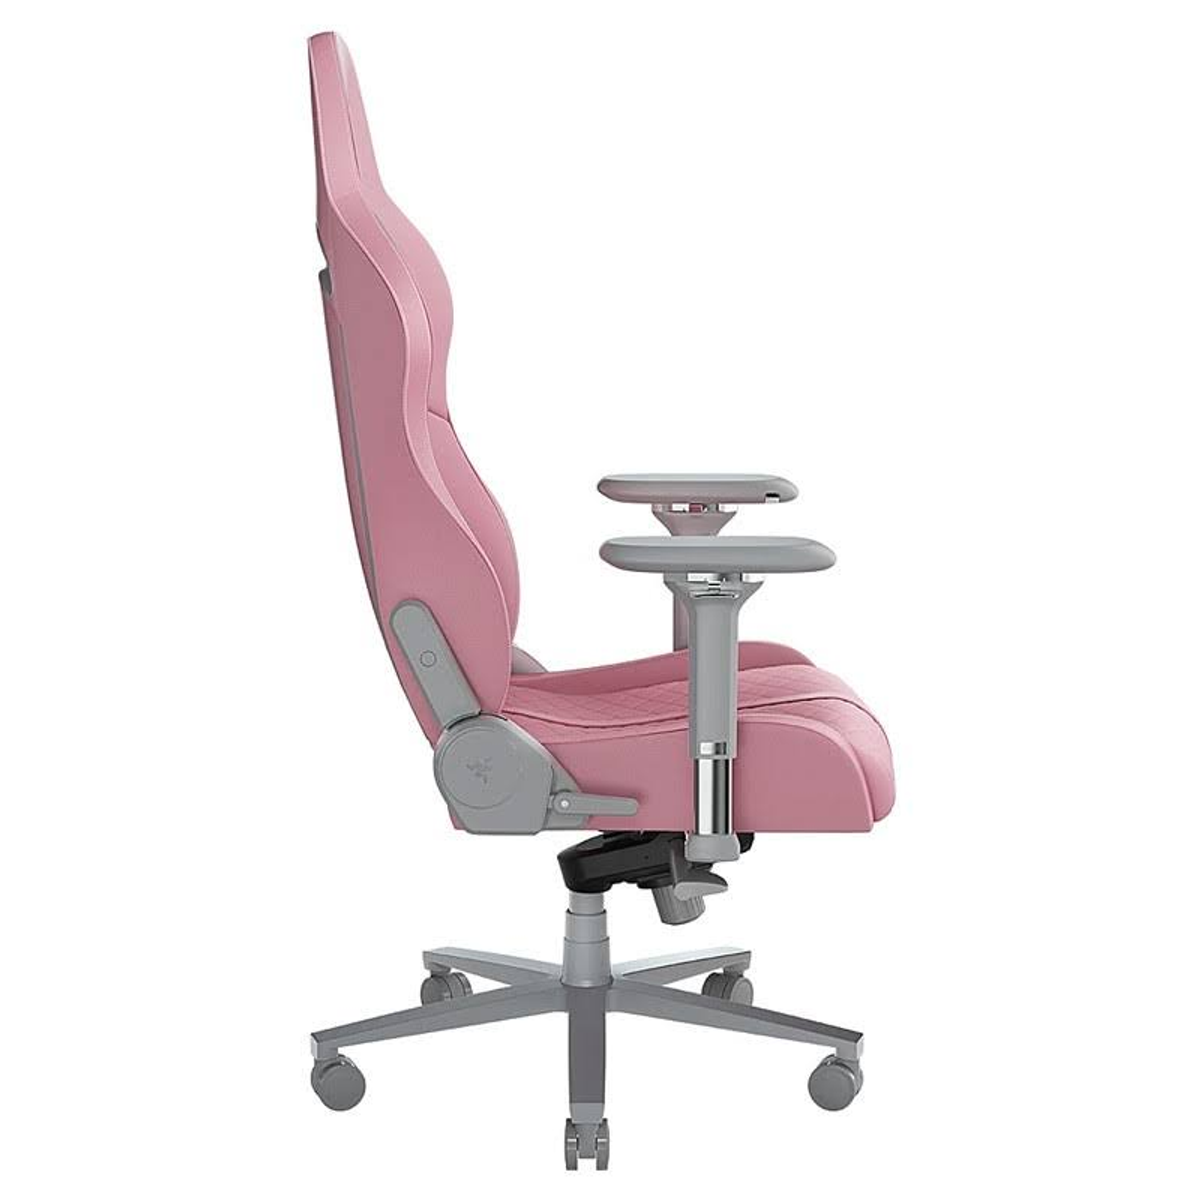 RAZER RZ38-03720200-R3G1 ENKI GAMING / Gaming Pink QUARTZ CHAIR Stuhl, Quartz